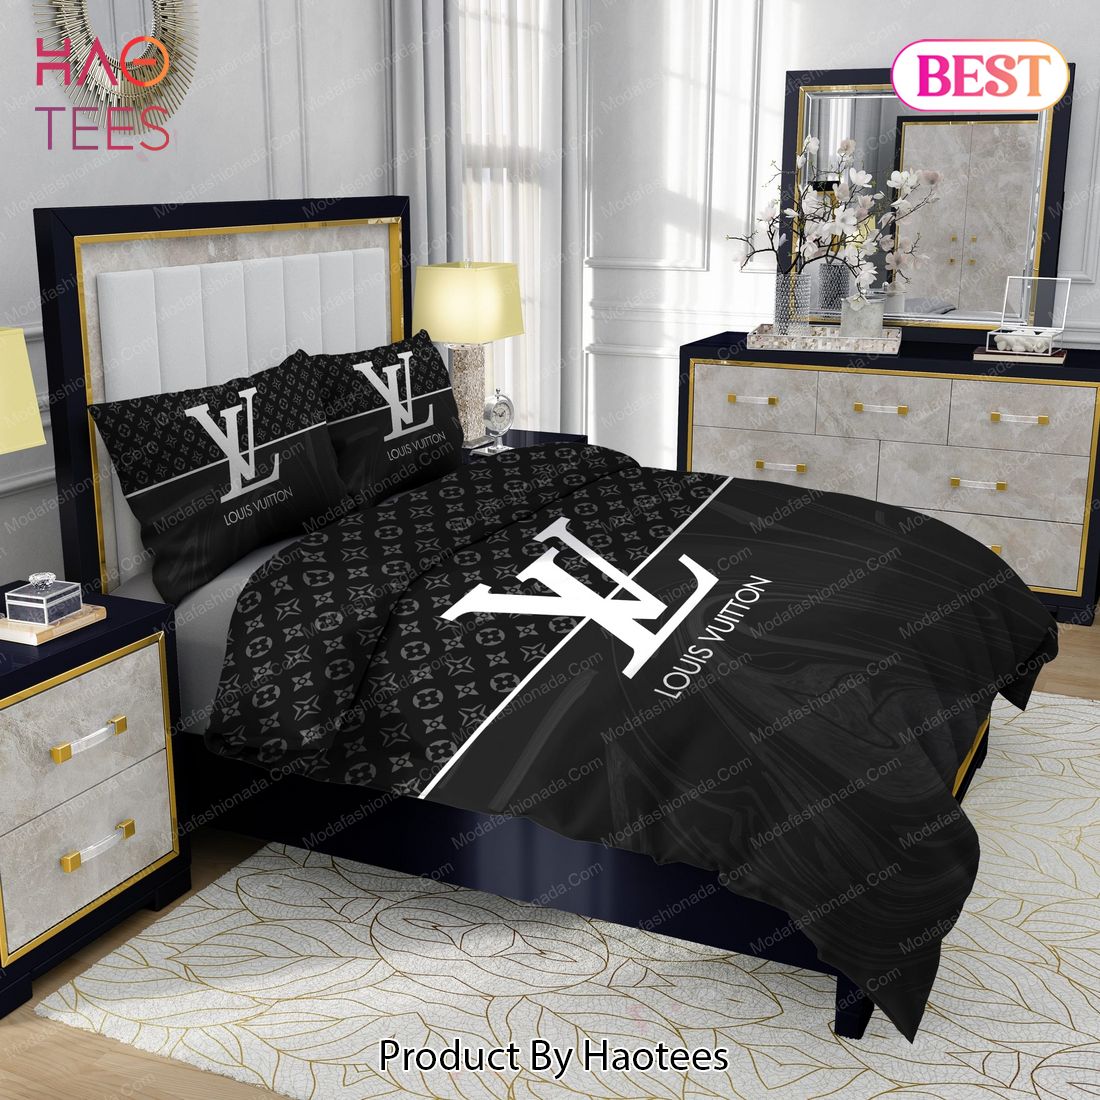 Louis Vuitton Black and White Monogram Comforter Bedding Set